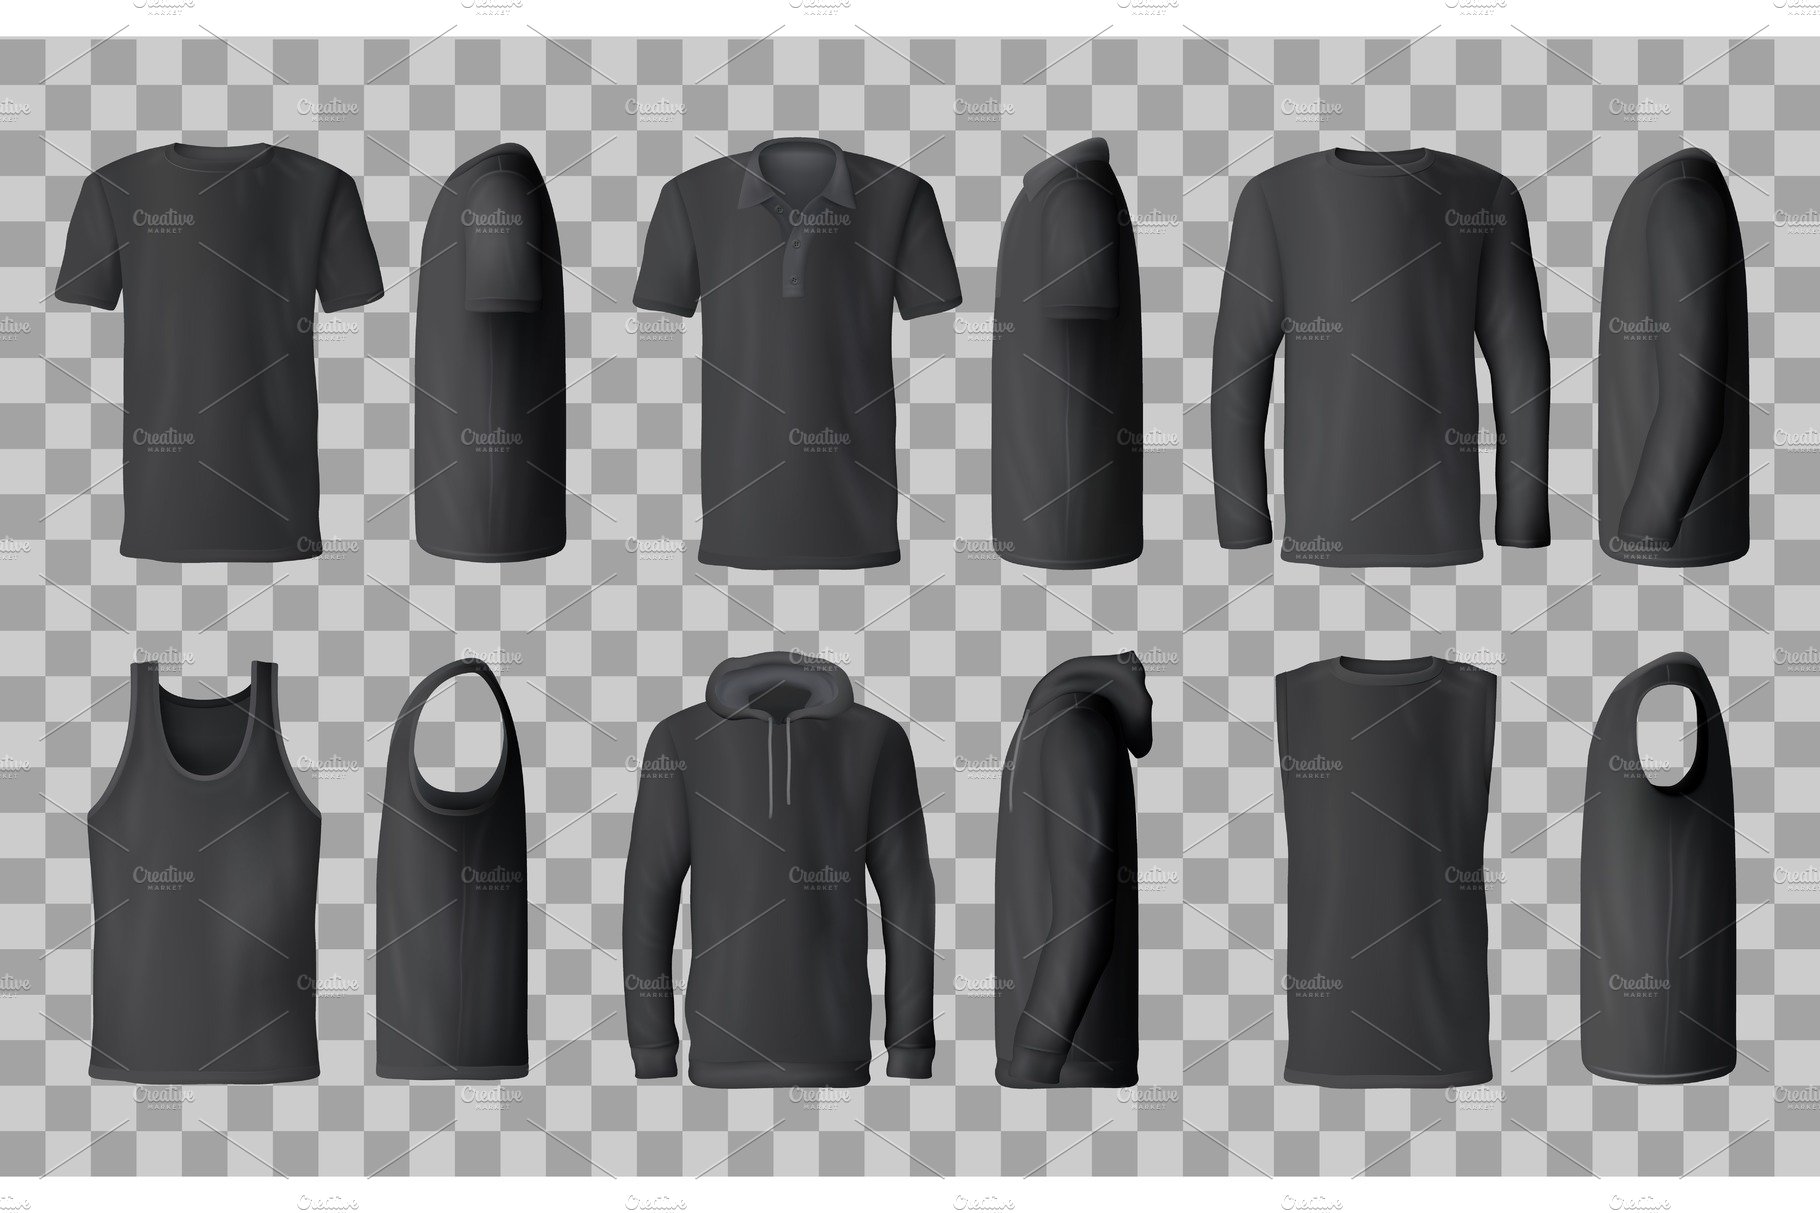 Black t-shirt, sweatshirt, hoodie cover image.